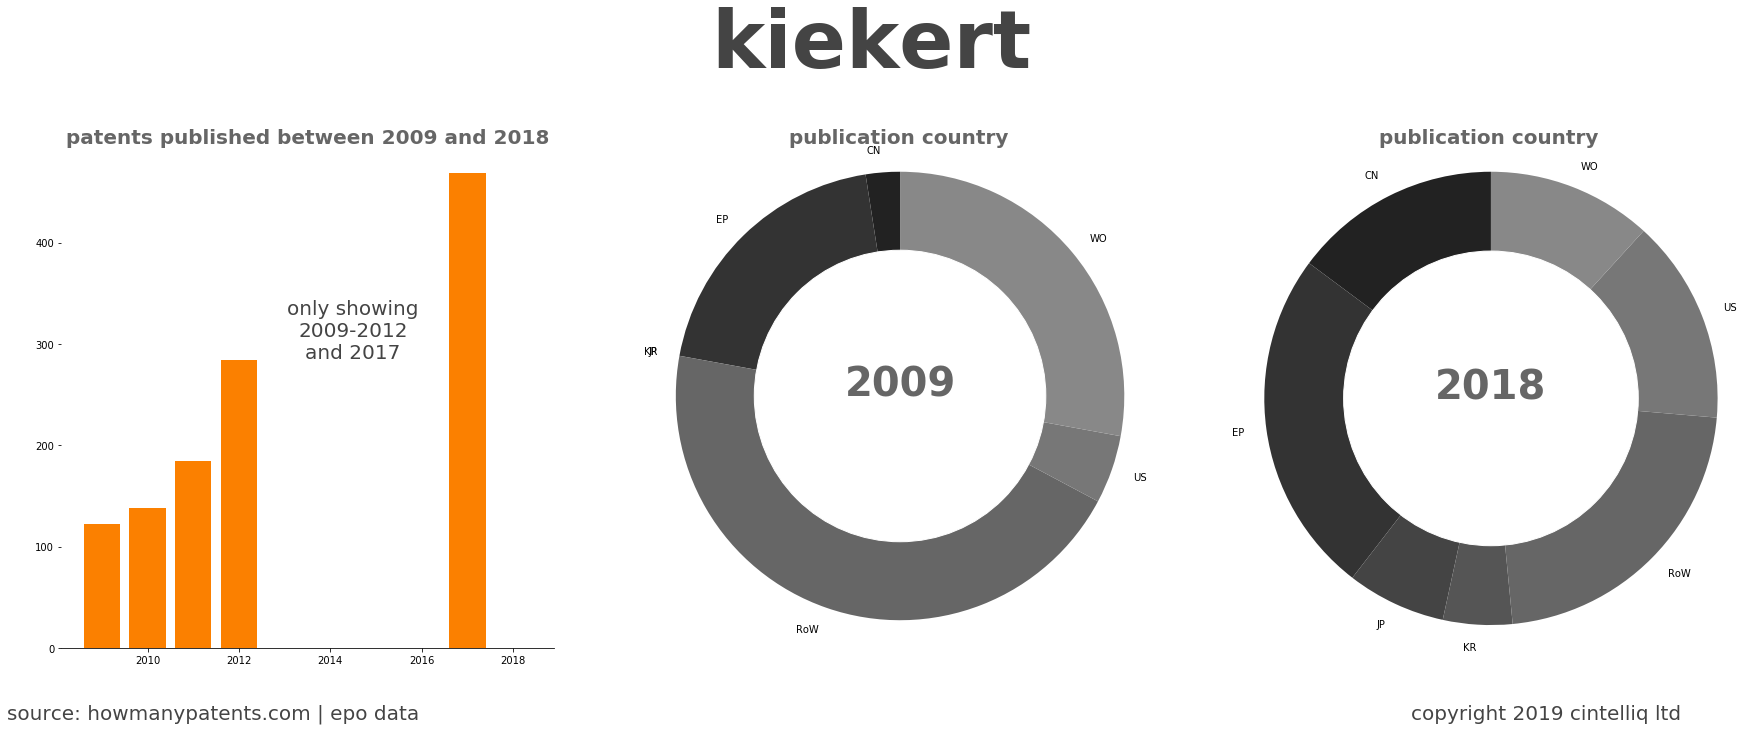 summary of patents for Kiekert